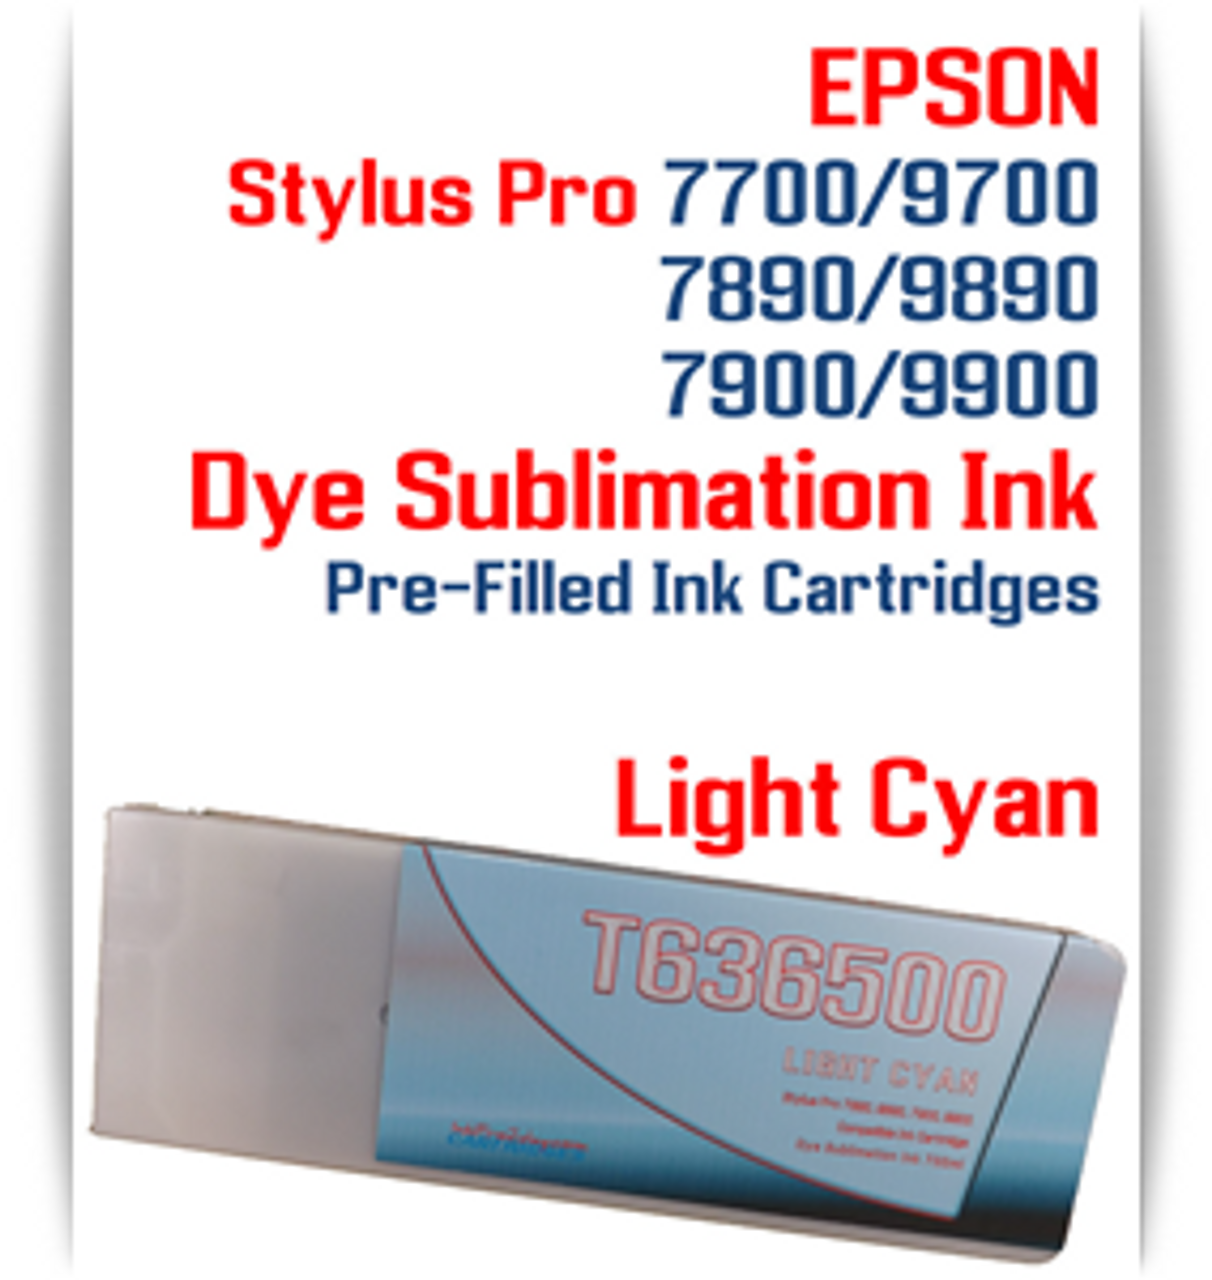 Light Cyan Epson Stylus Pro 7900/9900 Pre-Filled Dye Sublimation Ink Cartridge